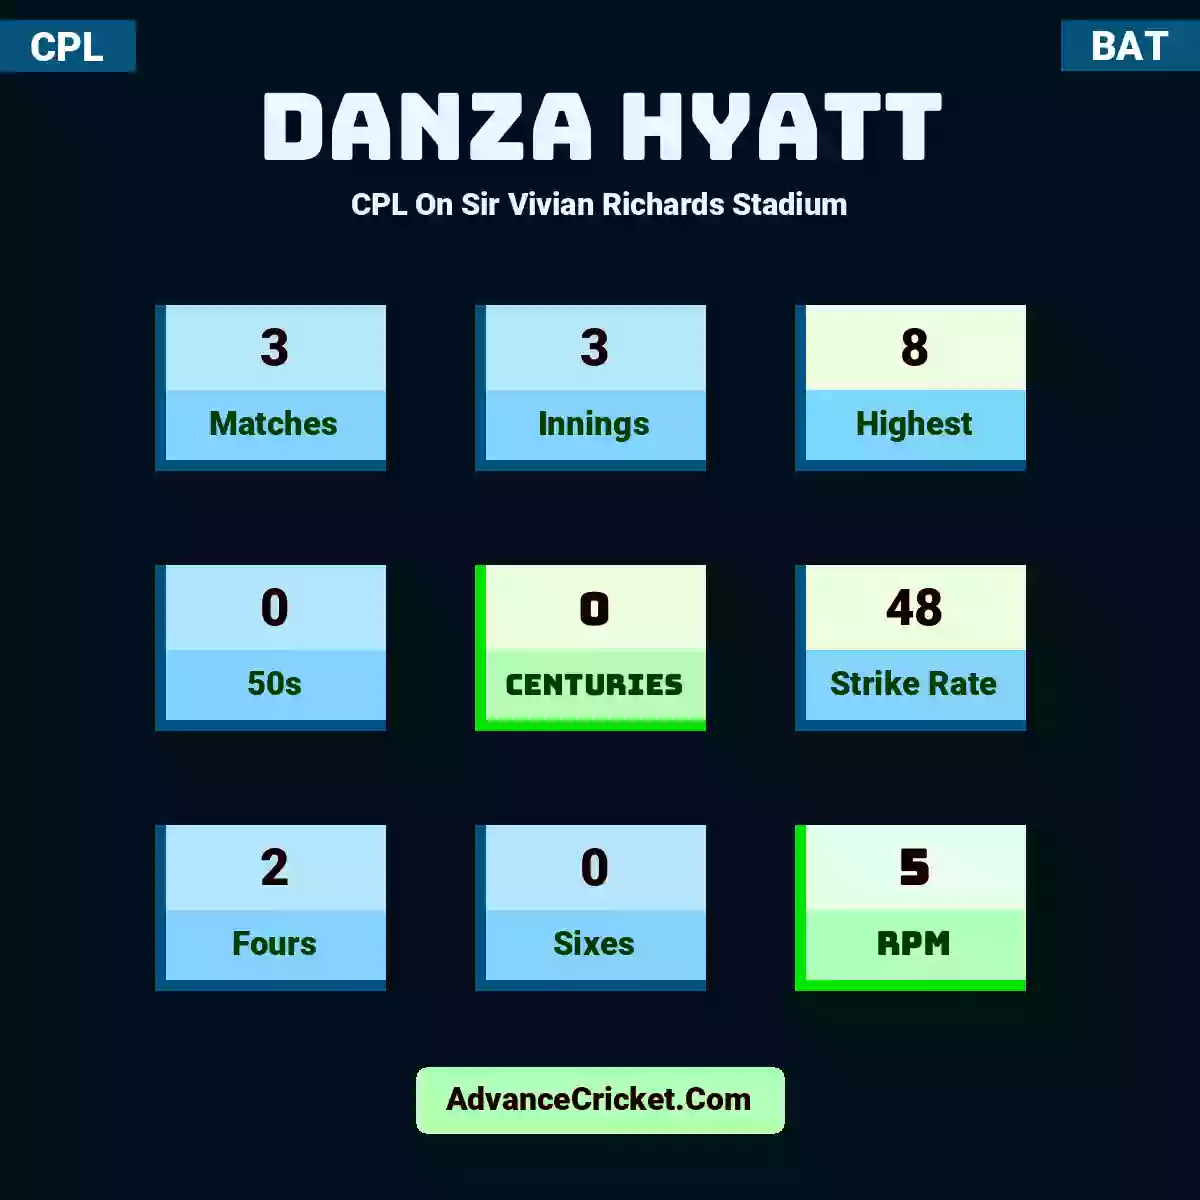 Danza Hyatt CPL  On Sir Vivian Richards Stadium, Danza Hyatt played 3 matches, scored 8 runs as highest, 0 half-centuries, and 0 centuries, with a strike rate of 48. D.Hyatt hit 2 fours and 0 sixes, with an RPM of 5.